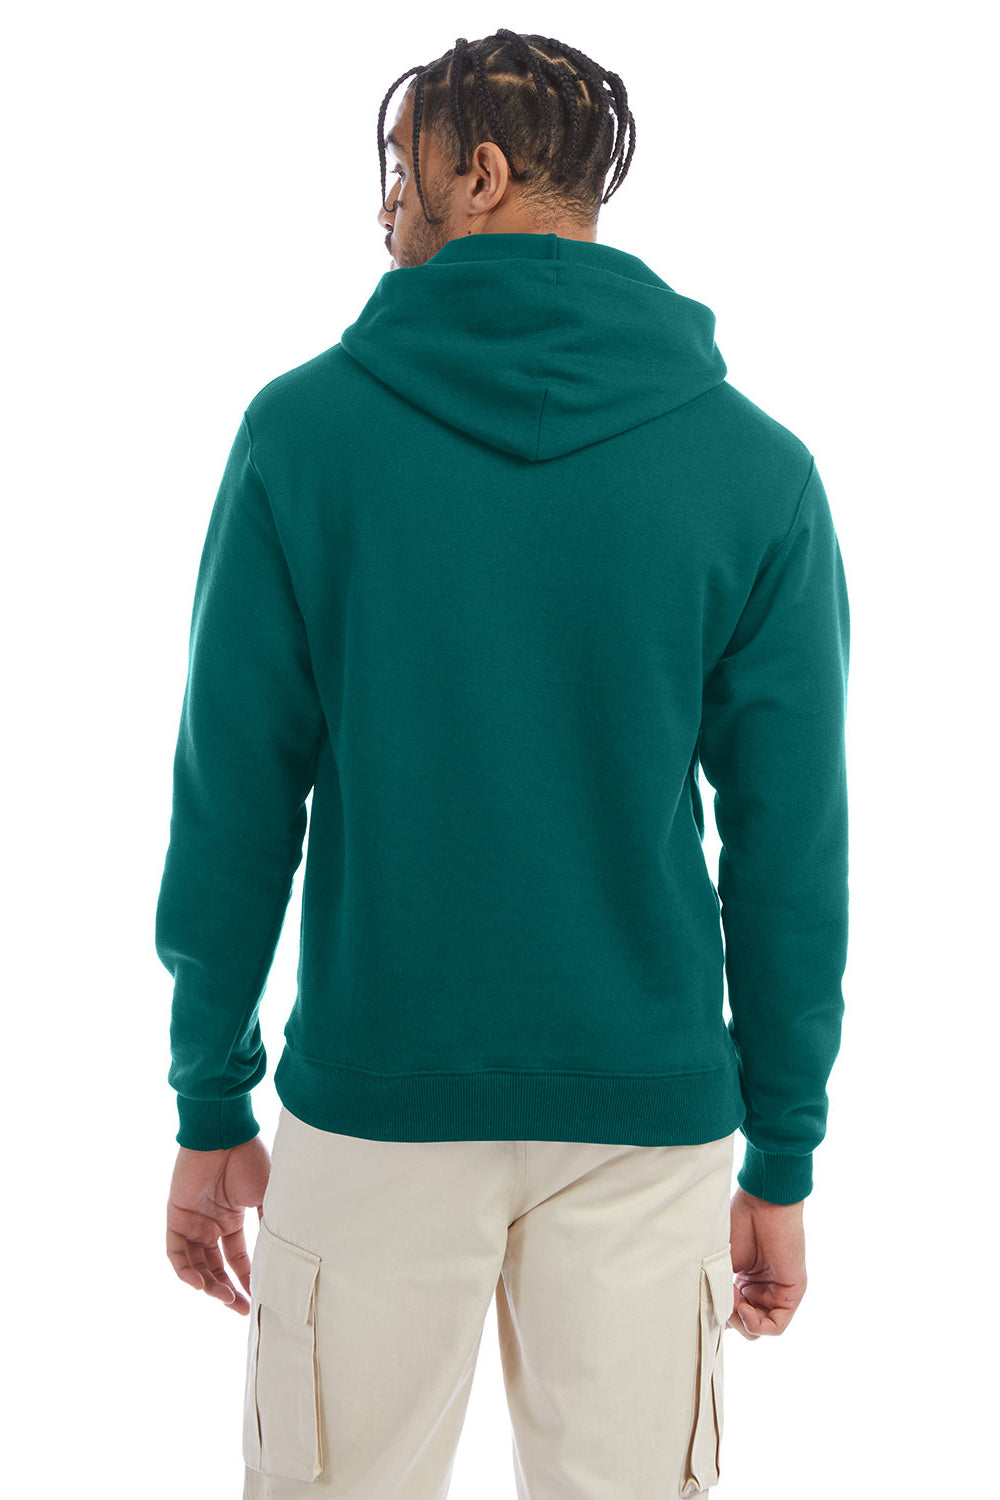 Champion S700 Mens Double Dry Eco Moisture Wicking Fleece Hooded Sweatshirt Hoodie Emerald Green Back